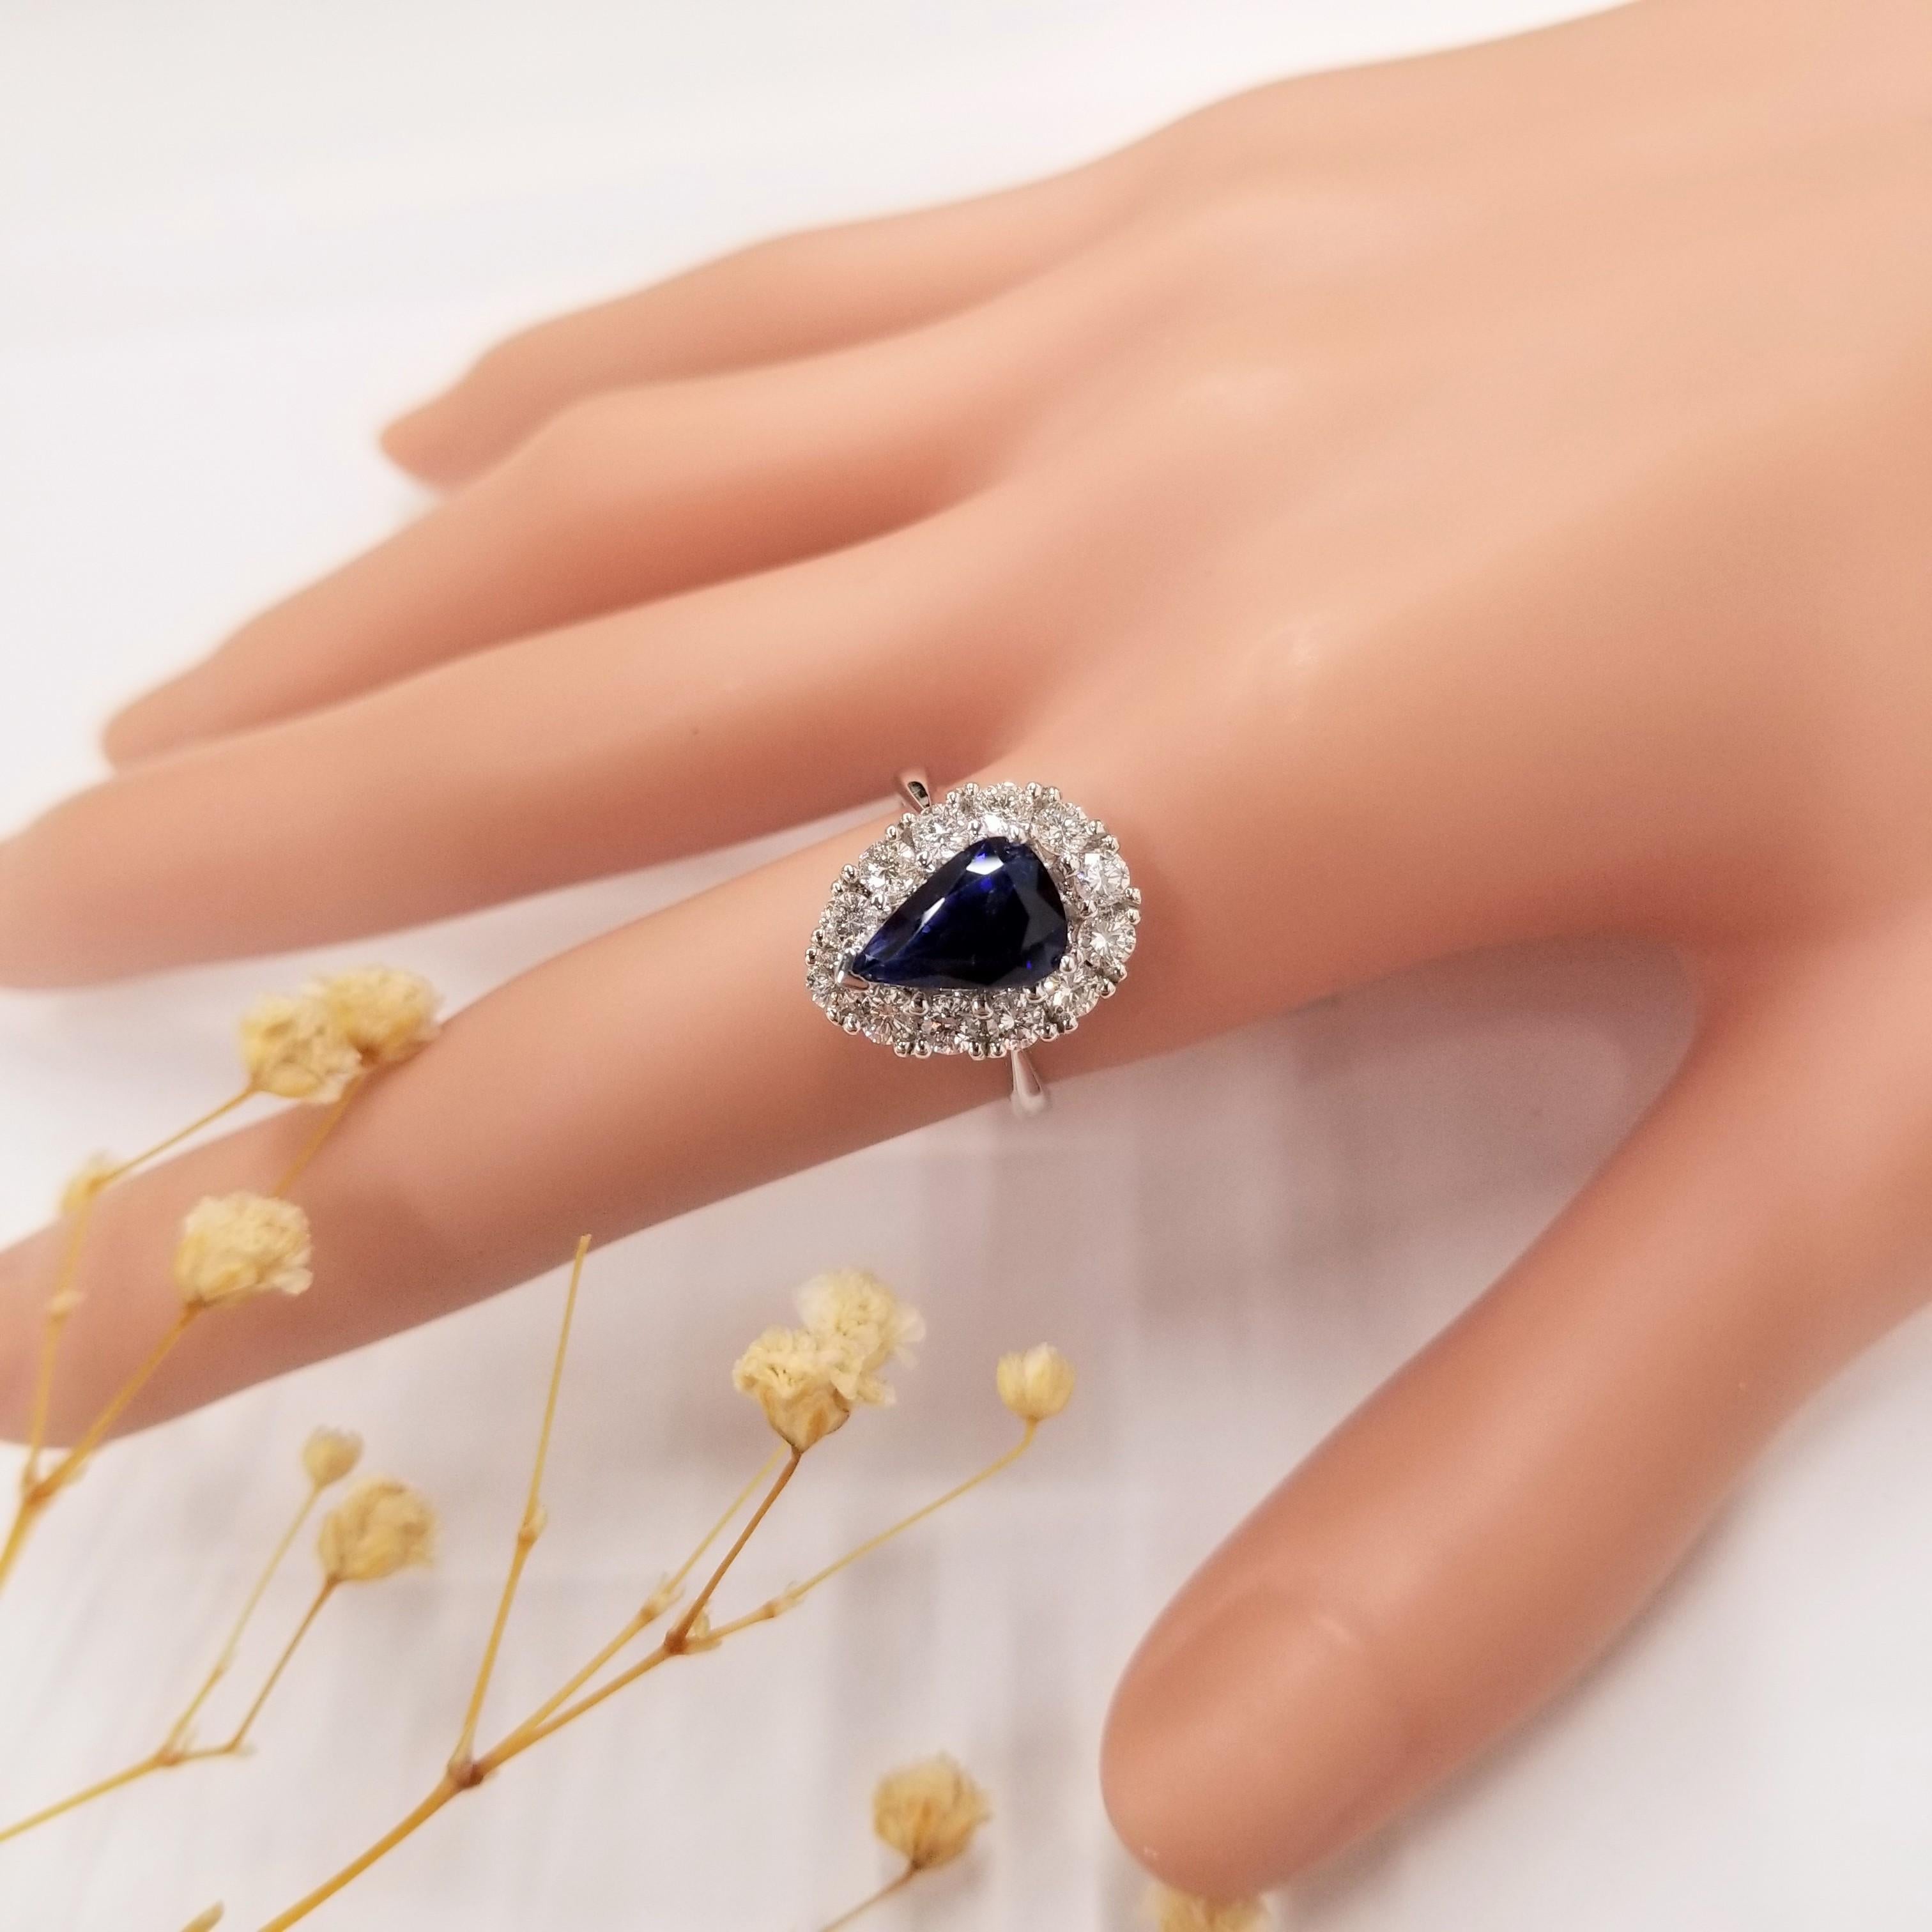 IGI Certified 3.08 Carat Blue Sapphire & Diamond Ring in 18K White Gold For Sale 2